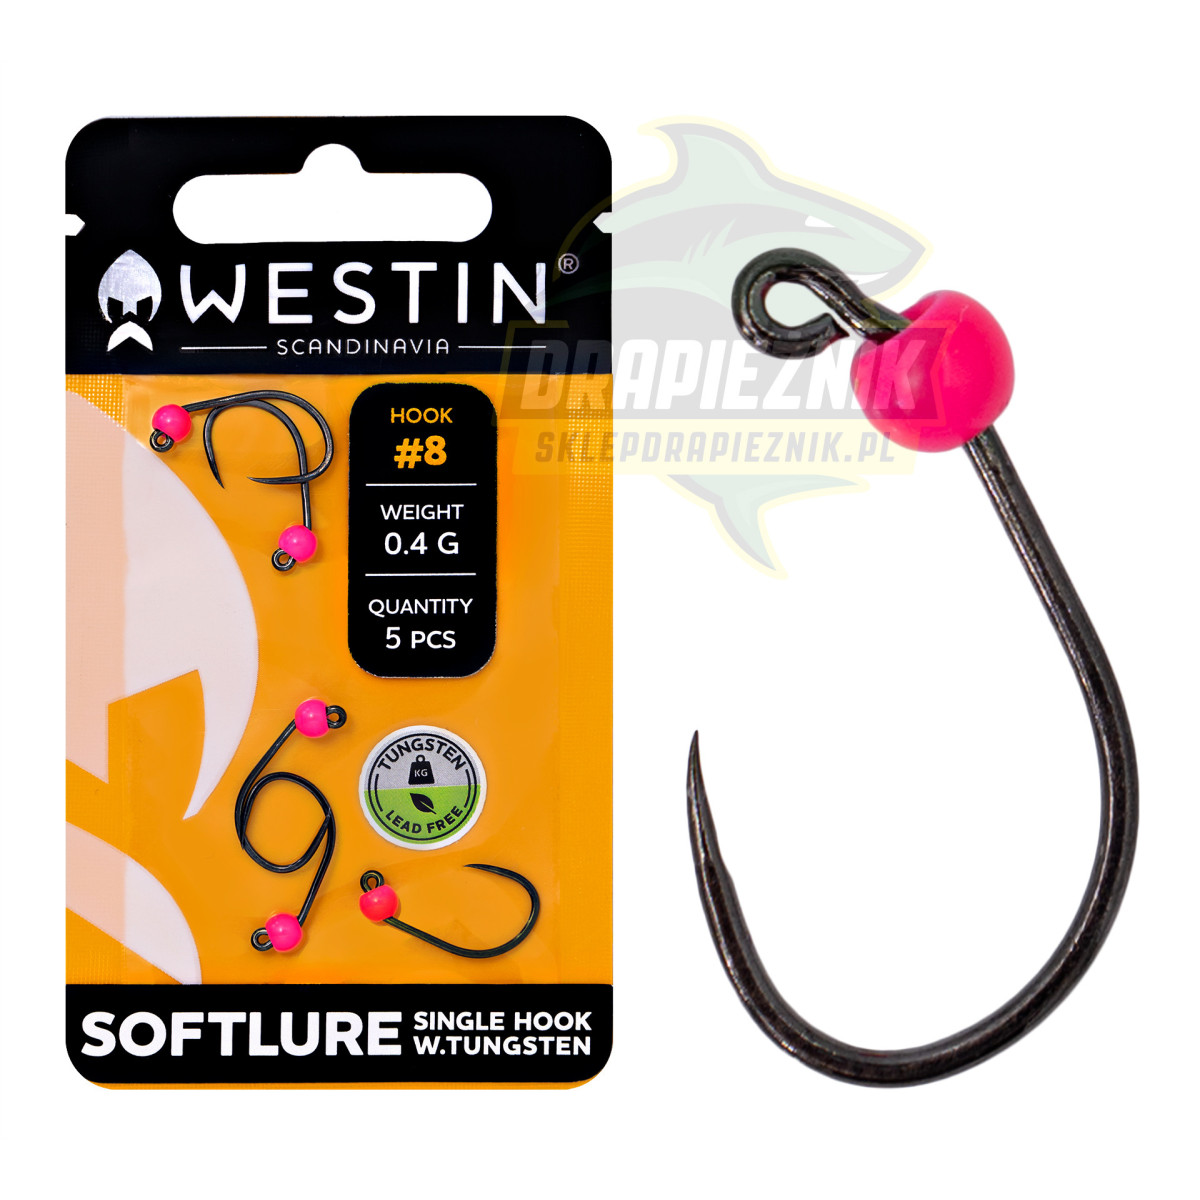 Główki Westin Softlure Single Hook Tungsten - PINK / hak 8 / 0.4g